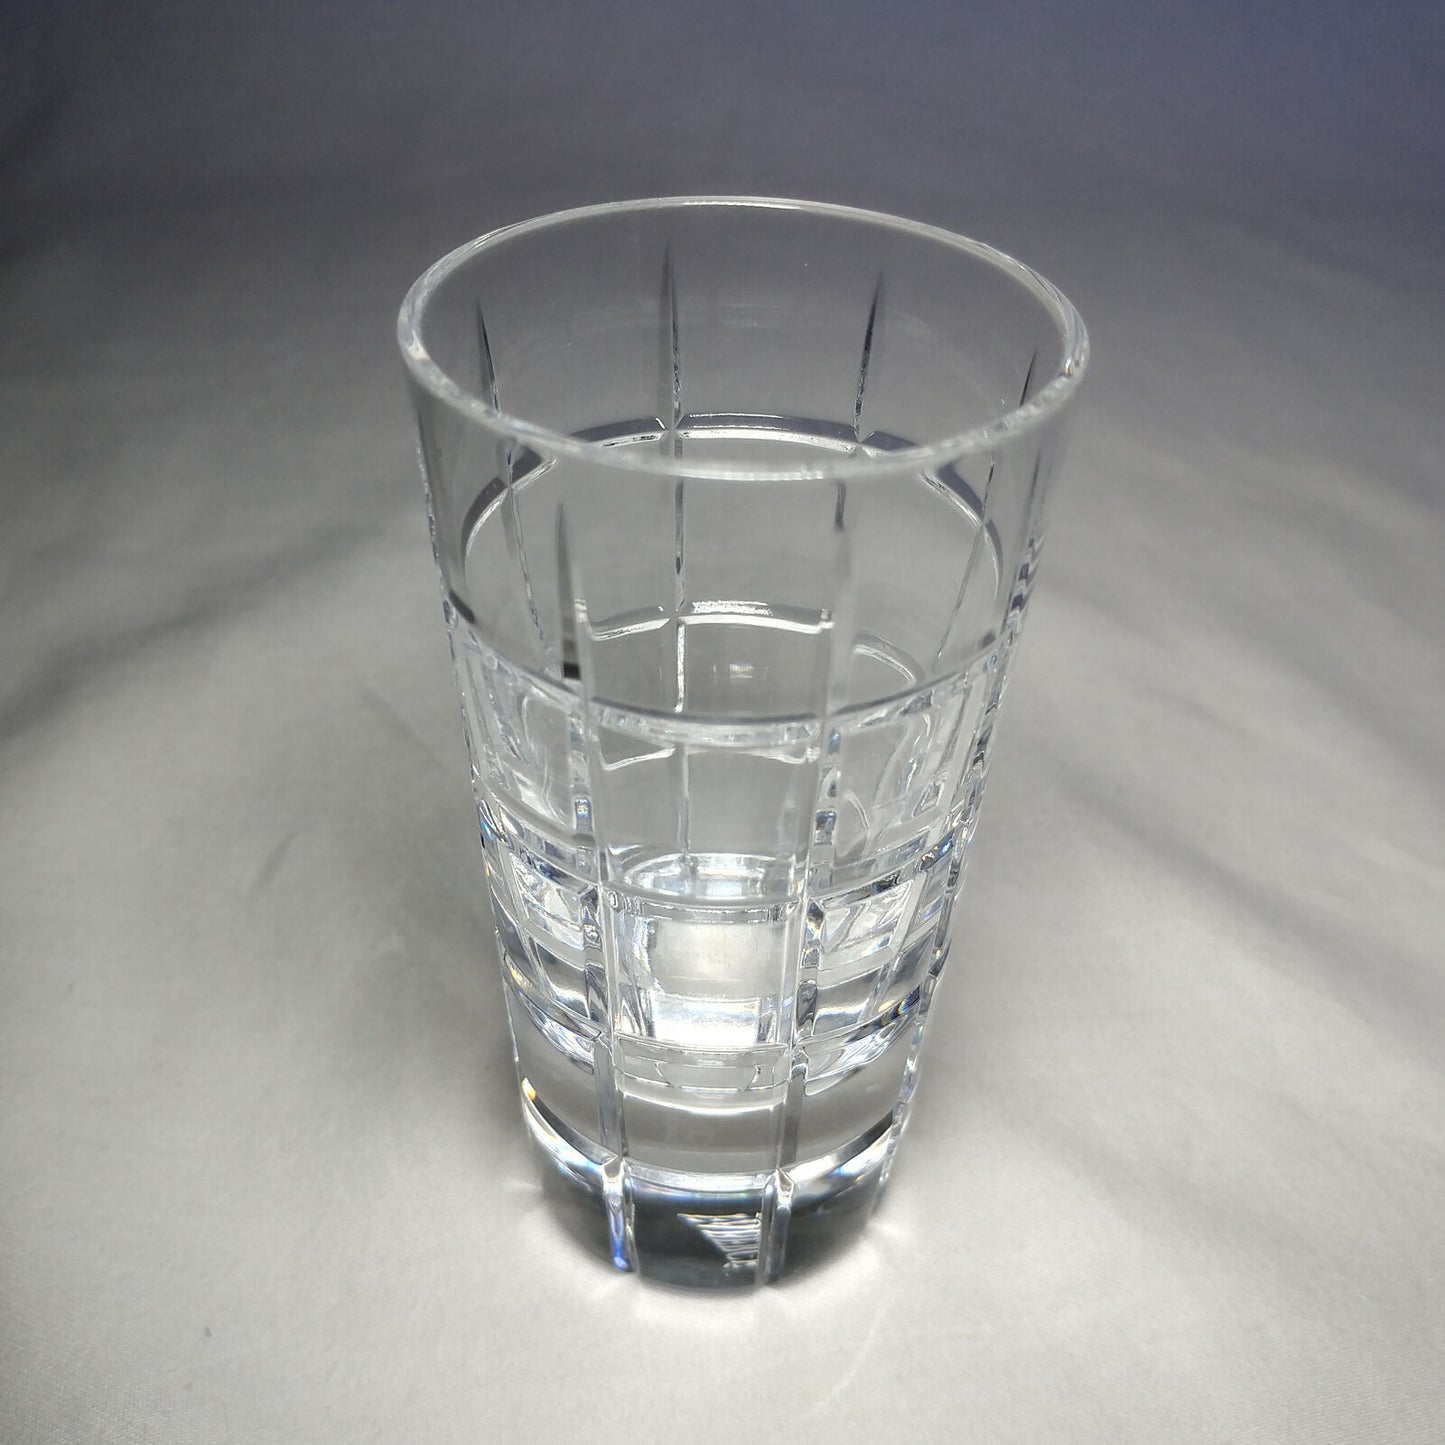 FABERGE METROPOLITAN CLEAR CRYSTAL SHOT GLASS